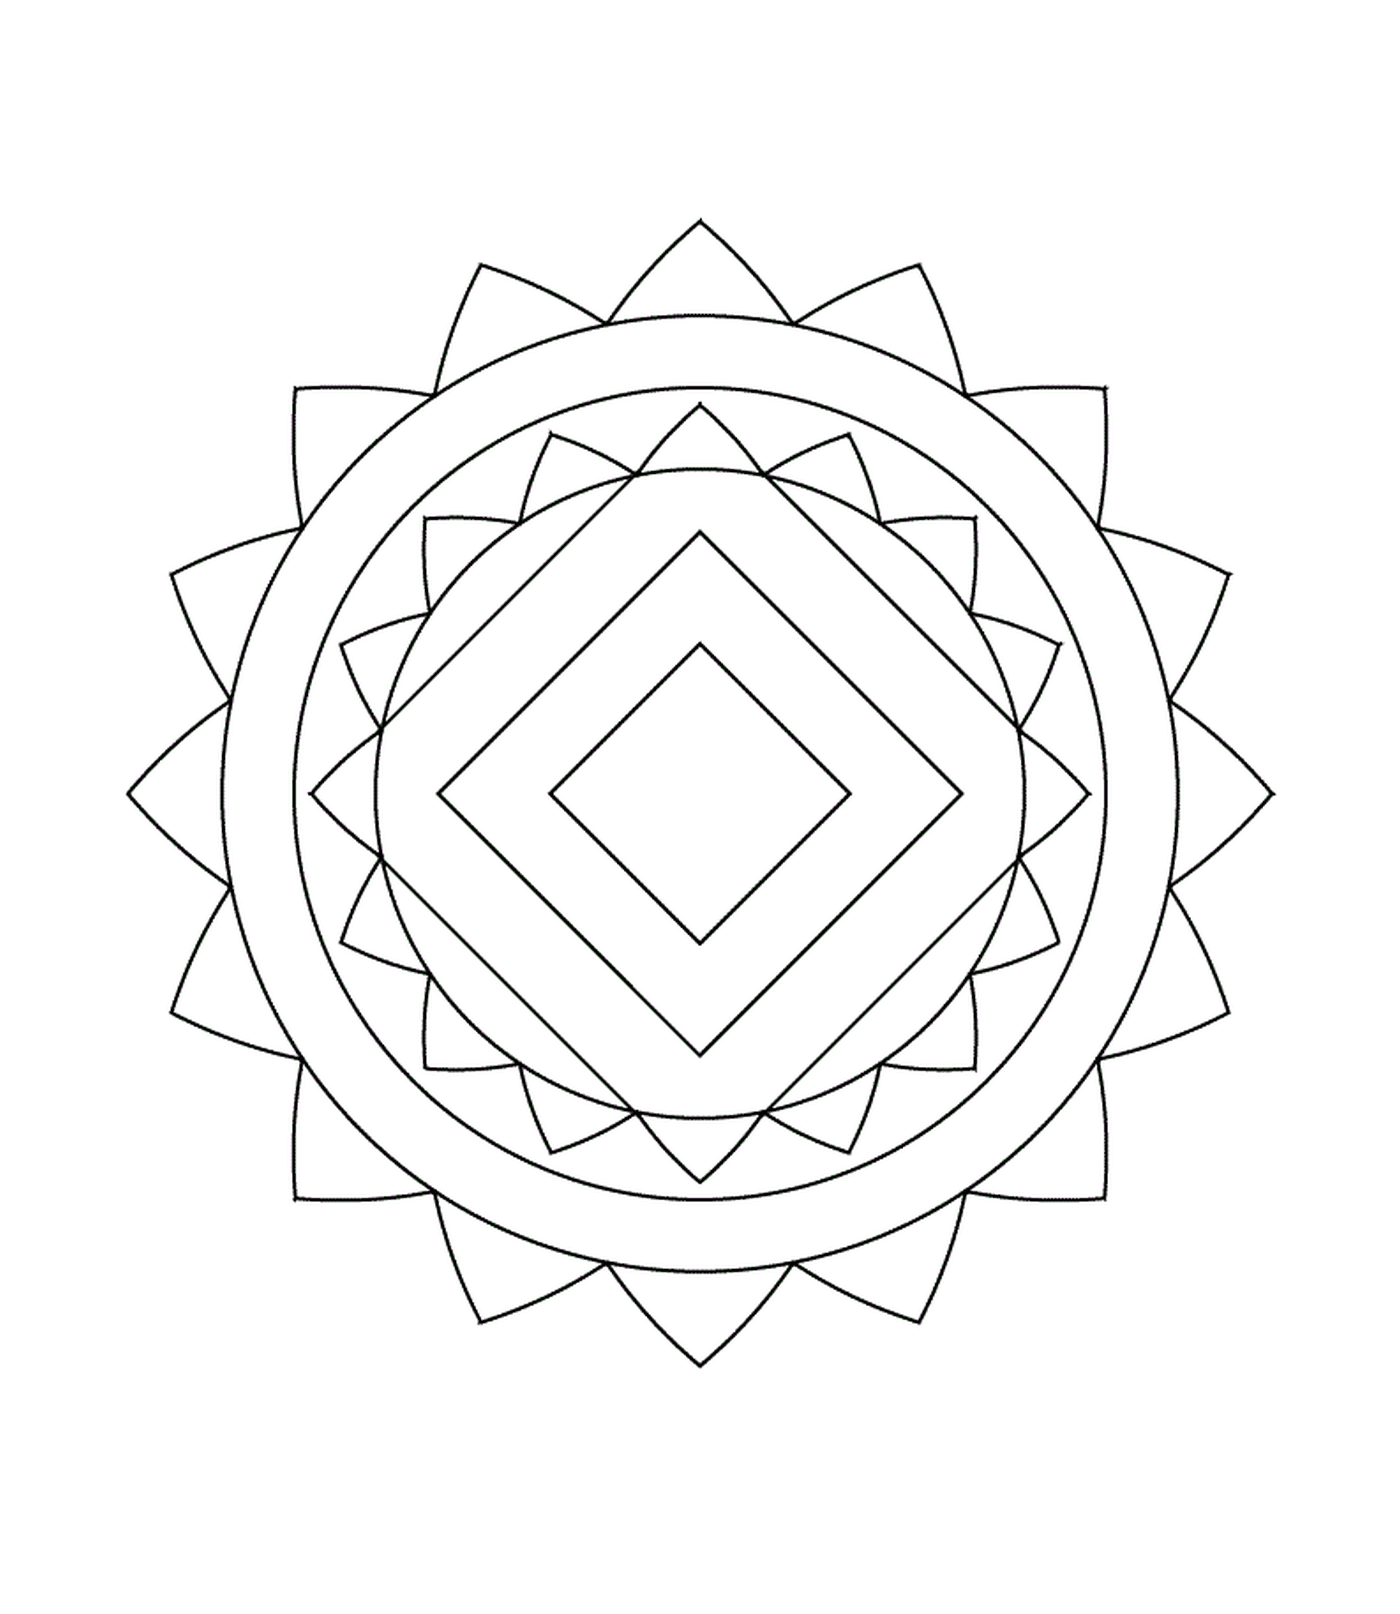  Desenho geométrico 